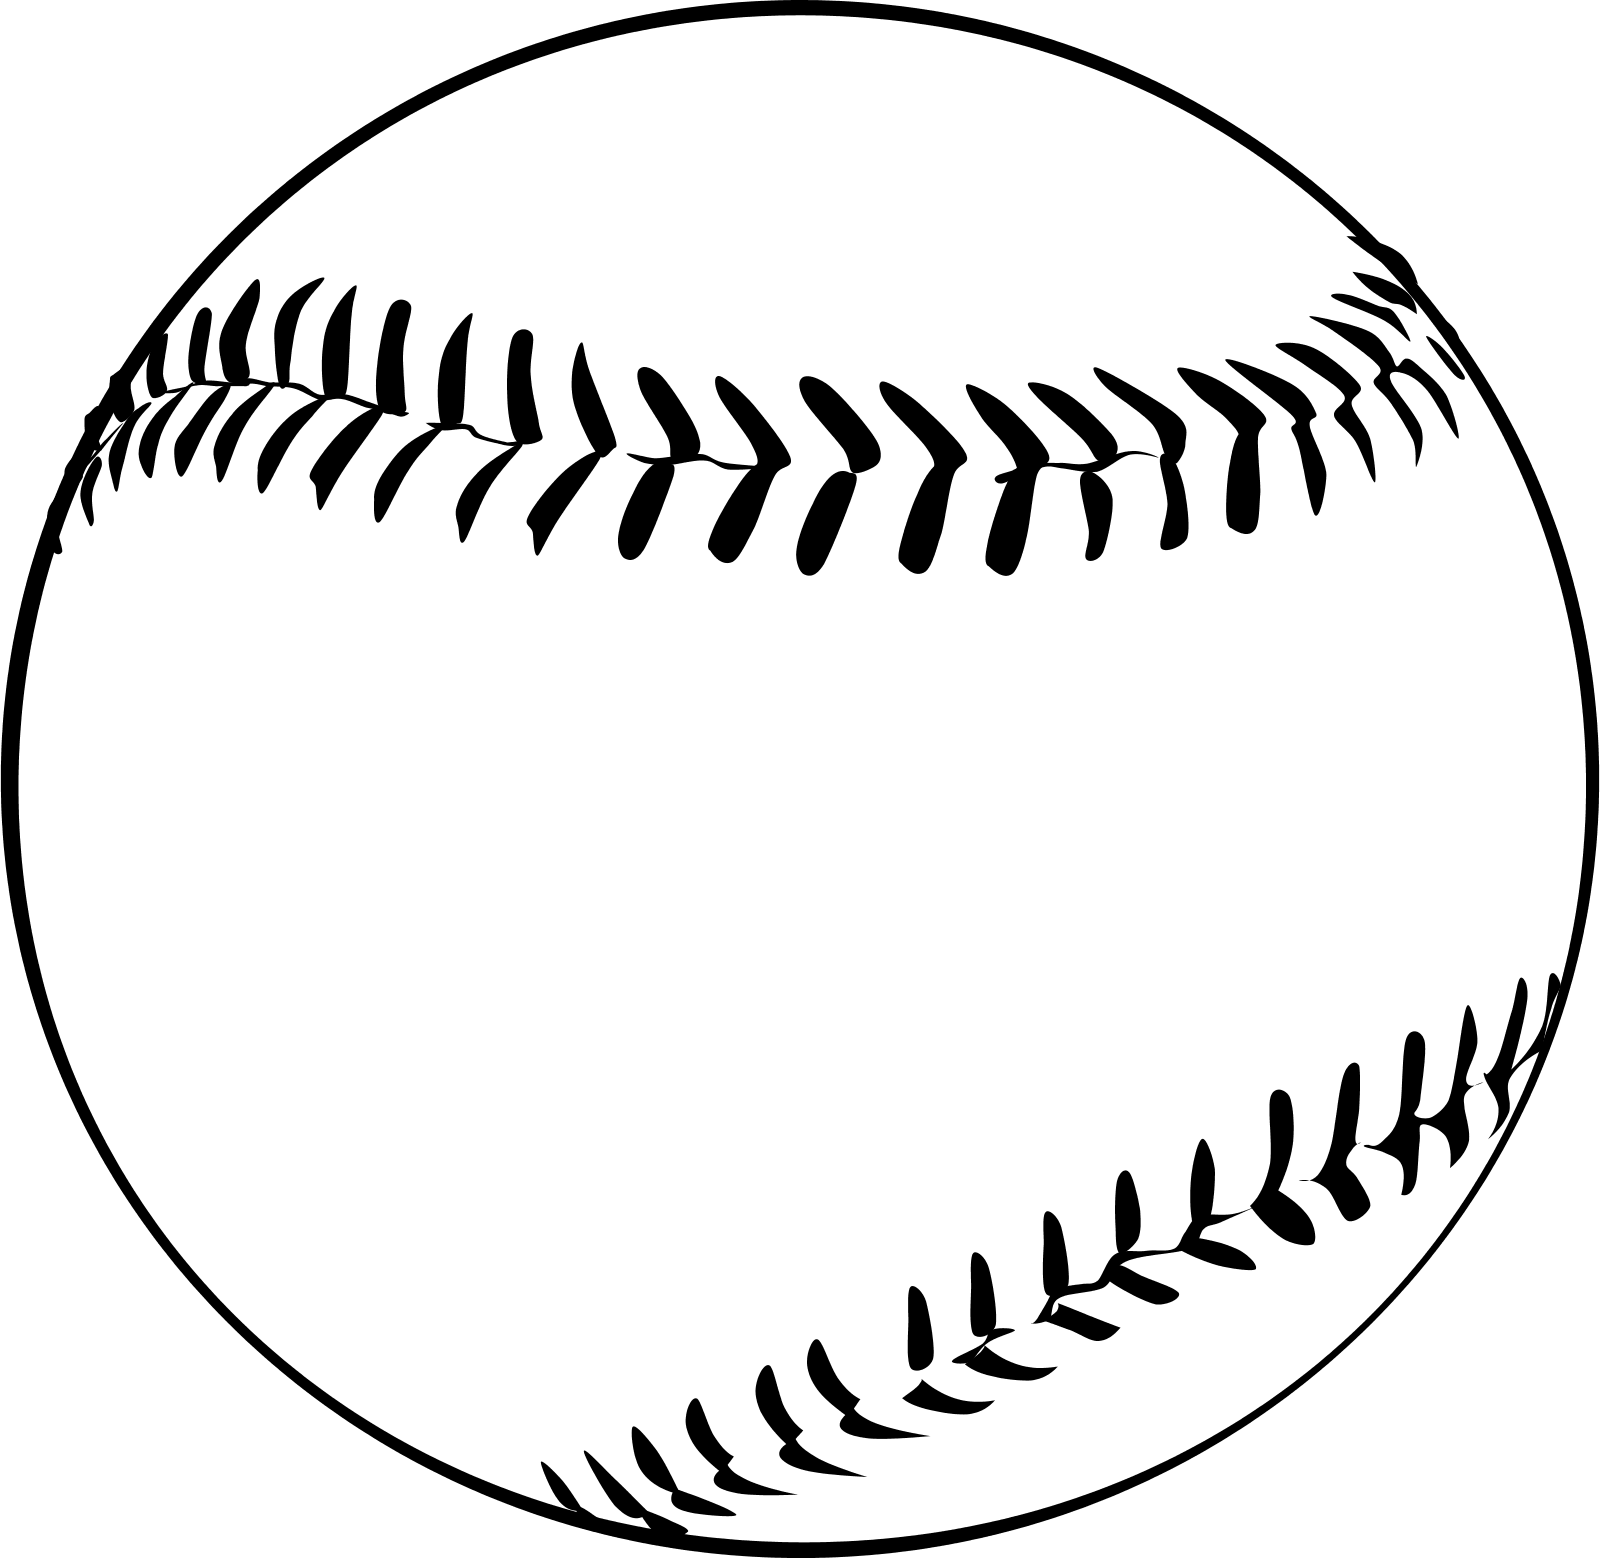 Softball clipart black and white